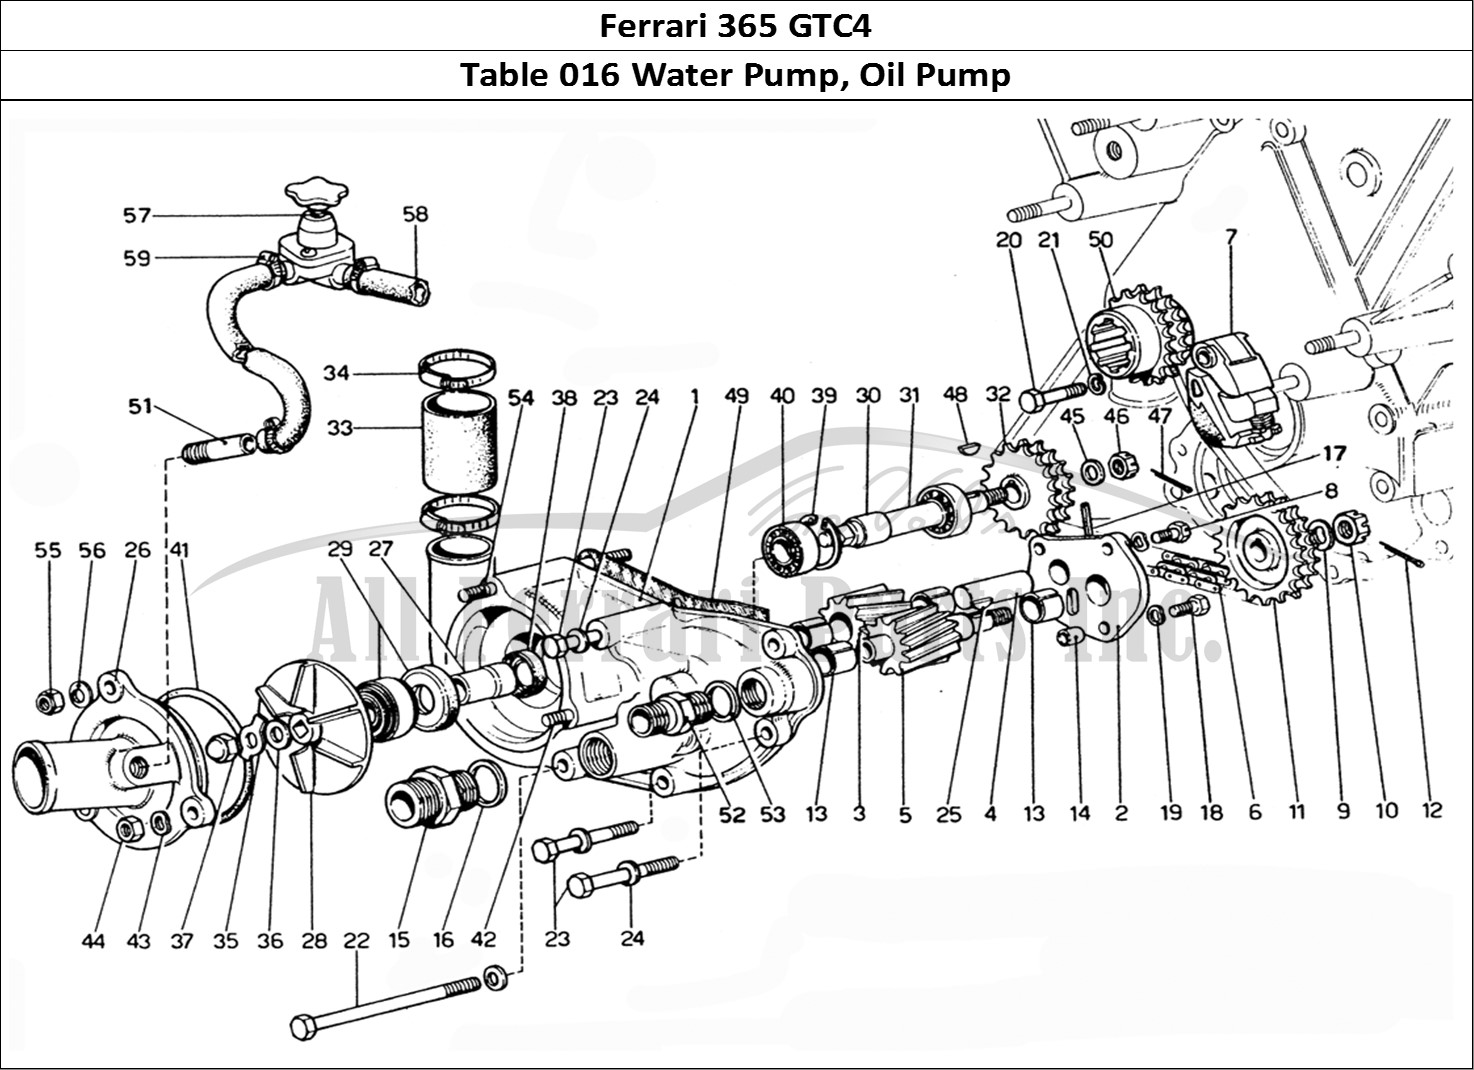 Ferrari Parts Ferrari 365 GTC4 (Mechanical) Page 016 Water & Oil pump